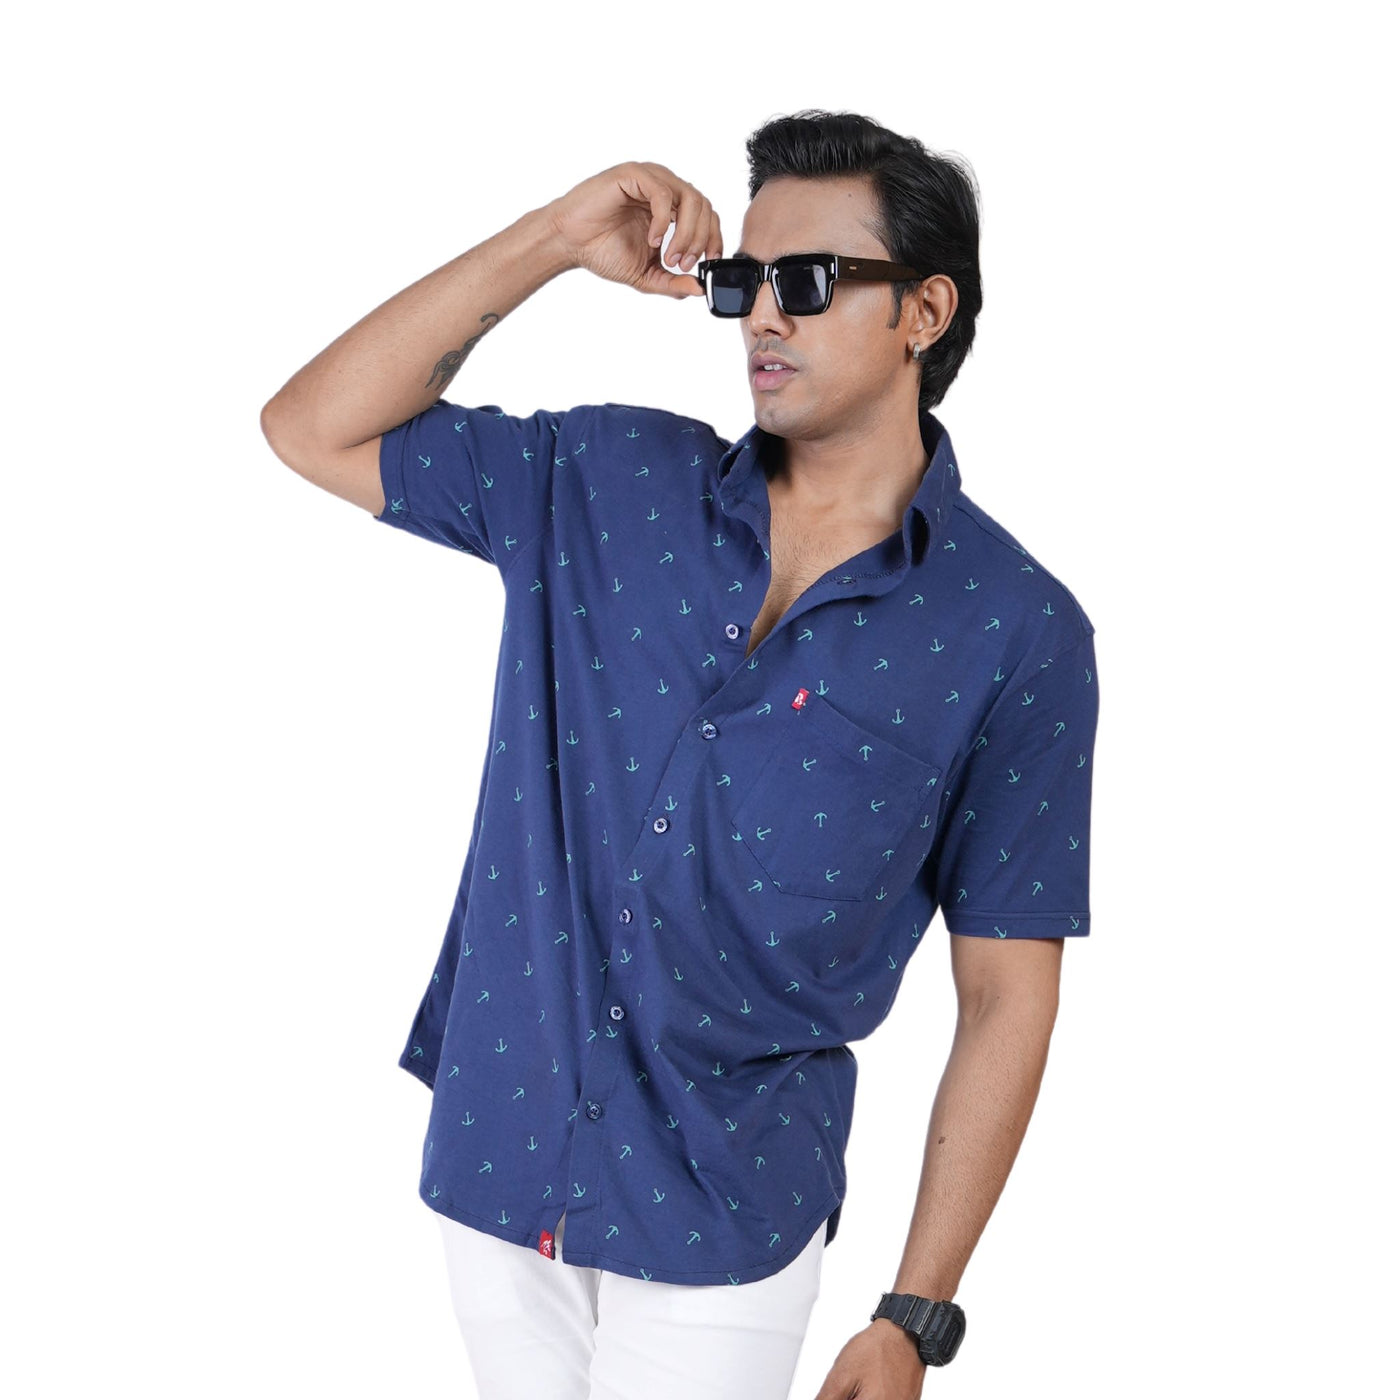 The Resort Knit Shirt Designer Polos P3 